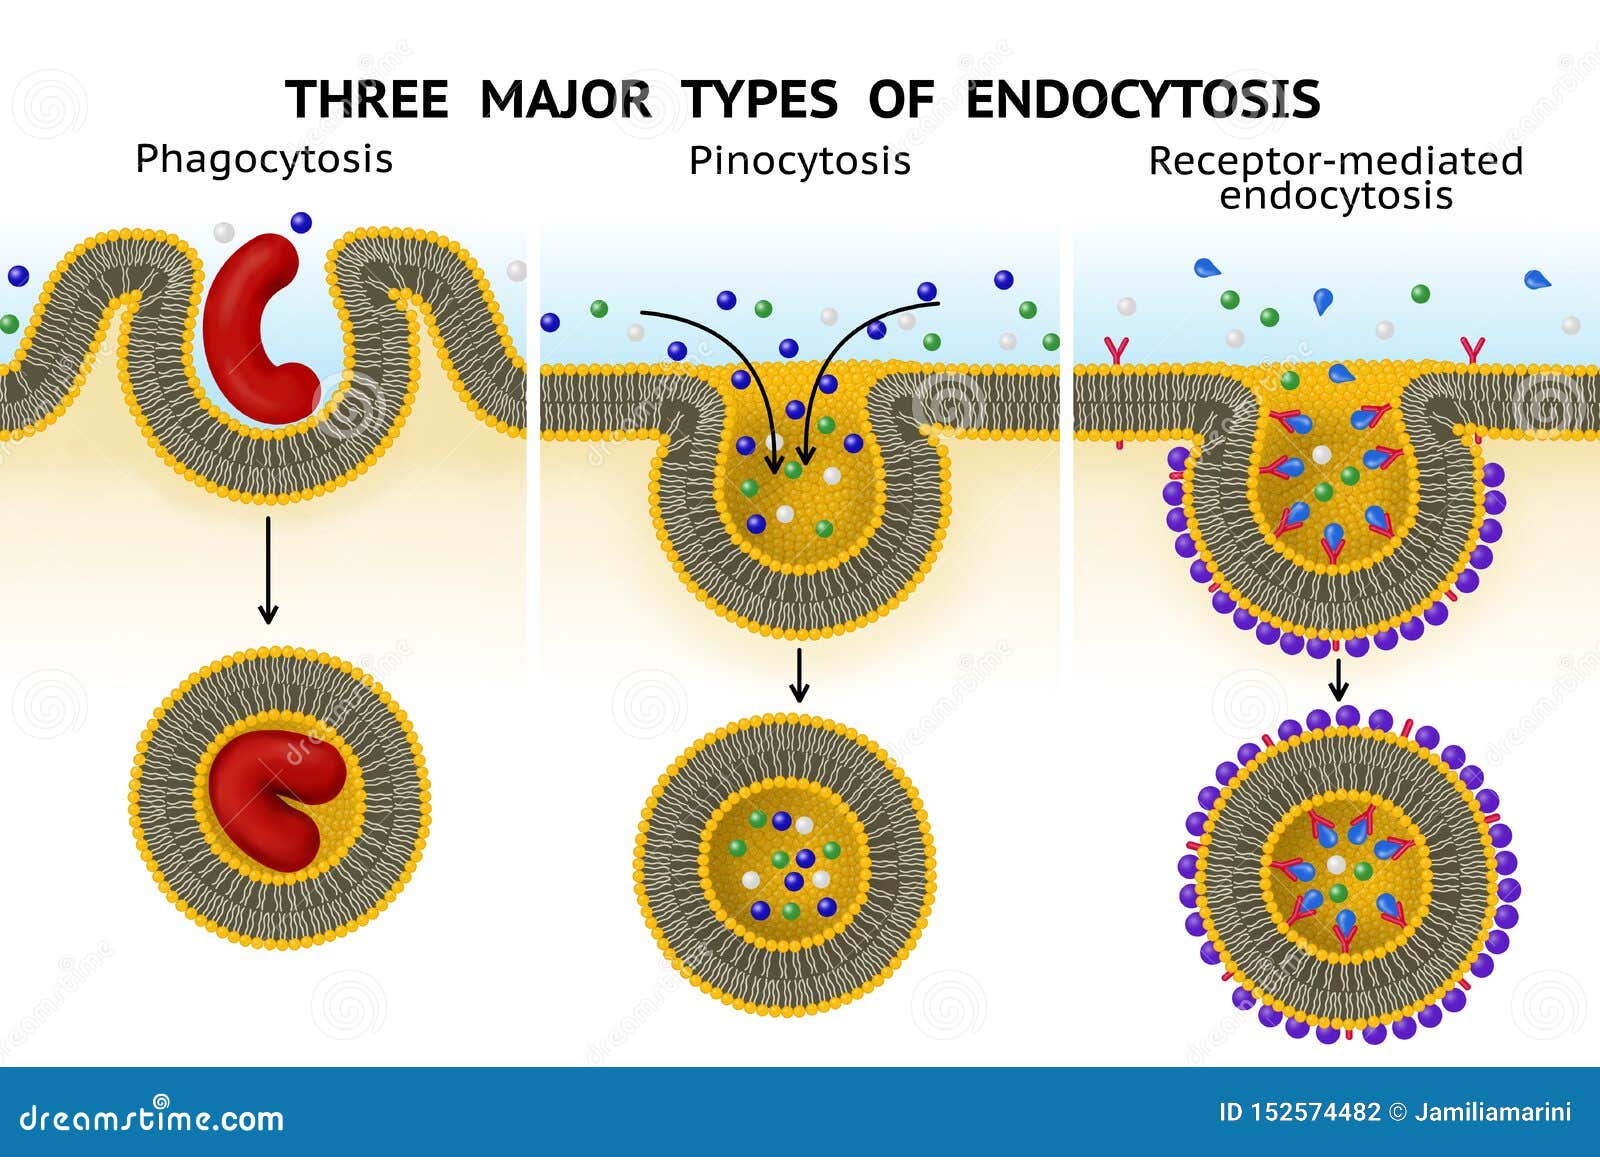 three major types of endocytosis